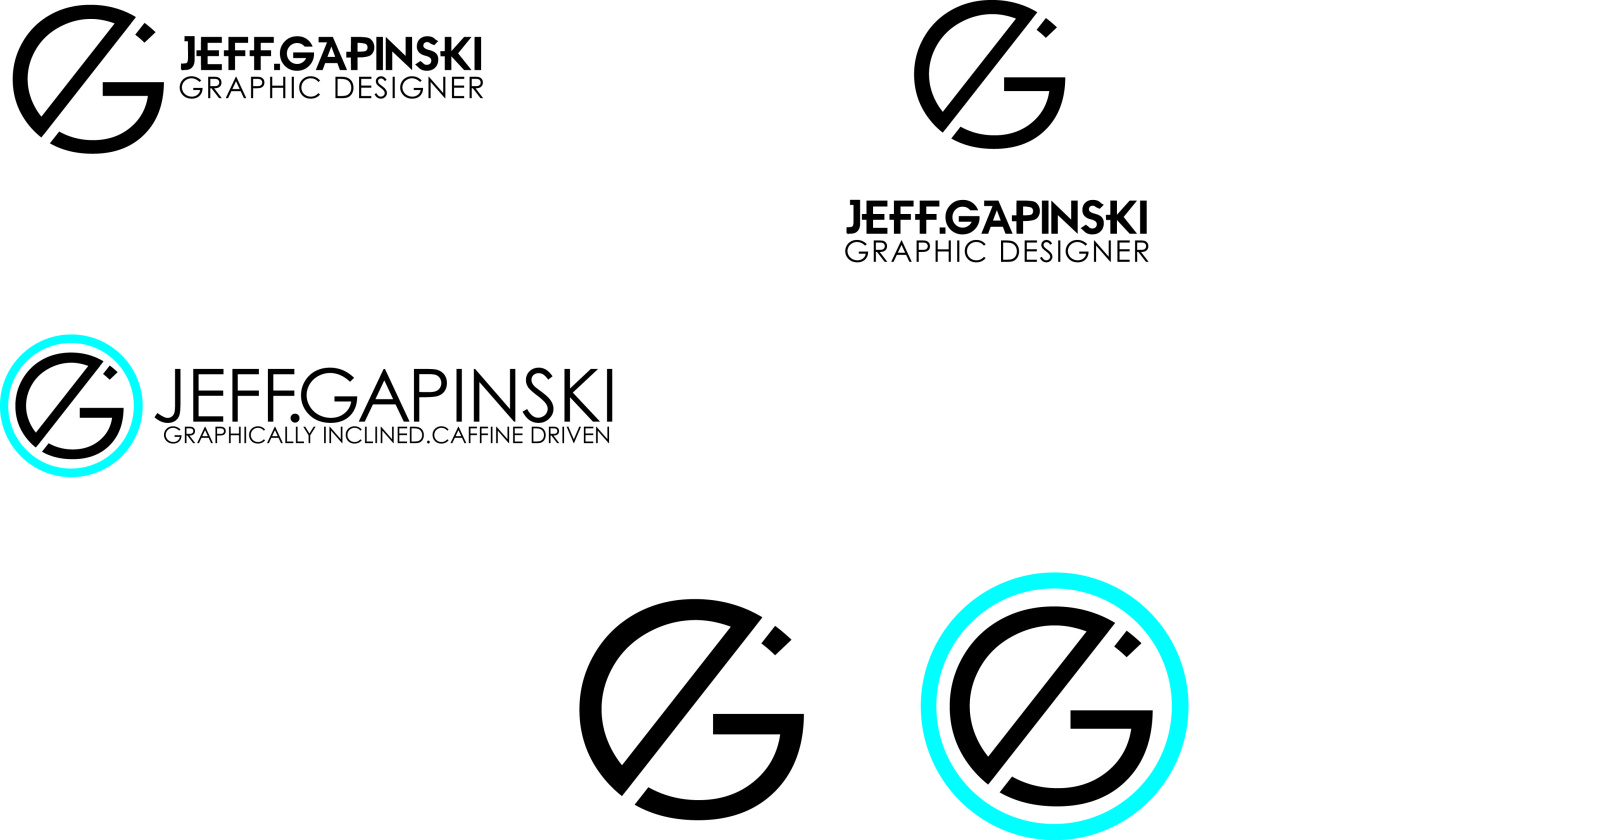 Graphic designer personal Logos